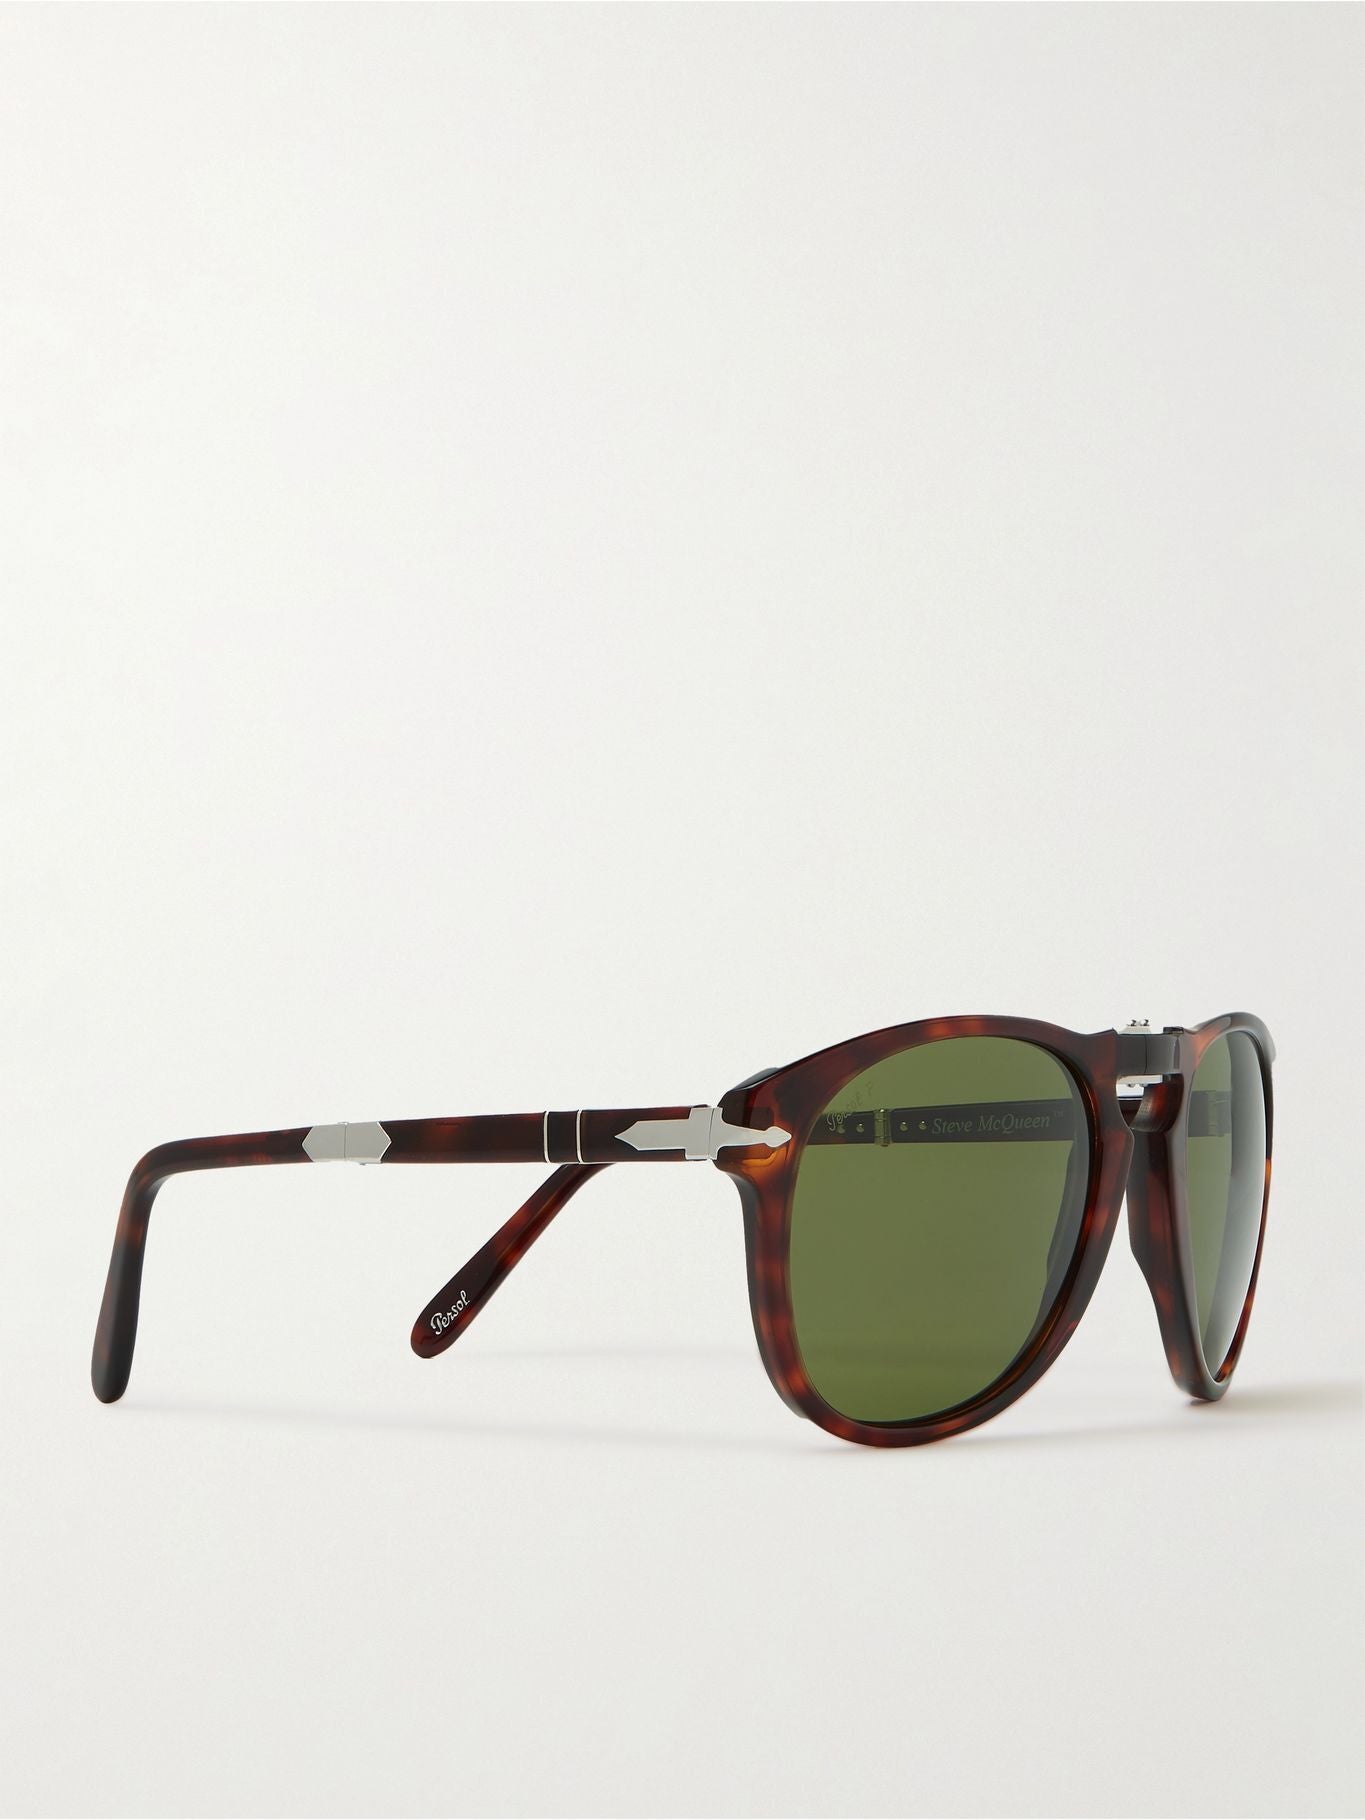 Persol - Aviator Folding Sunglasses 714 Polarized - Havana / Green 